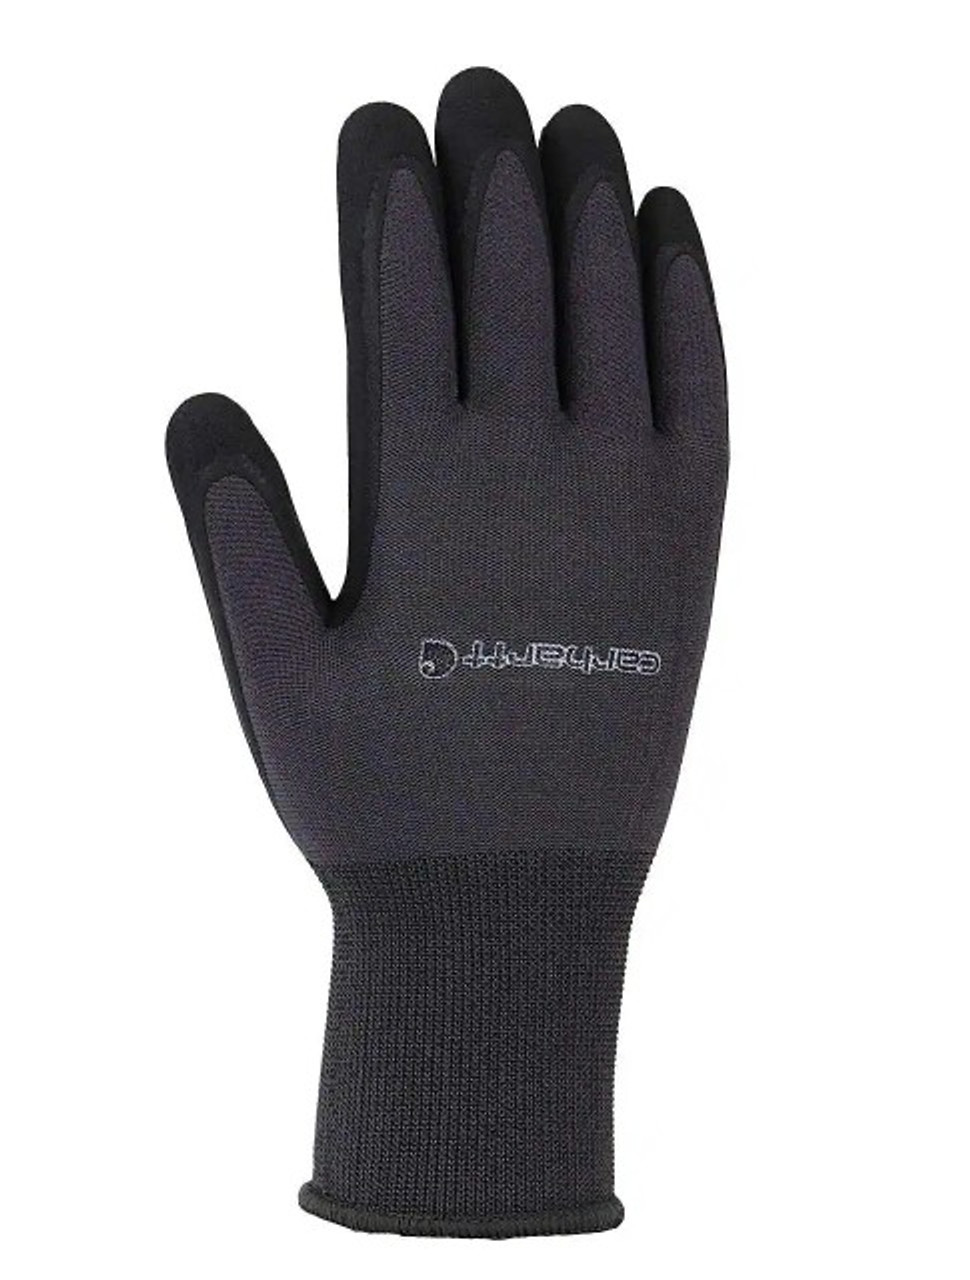 Carhartt Men's All-Purpose Nitrile Grip Gloves - Black